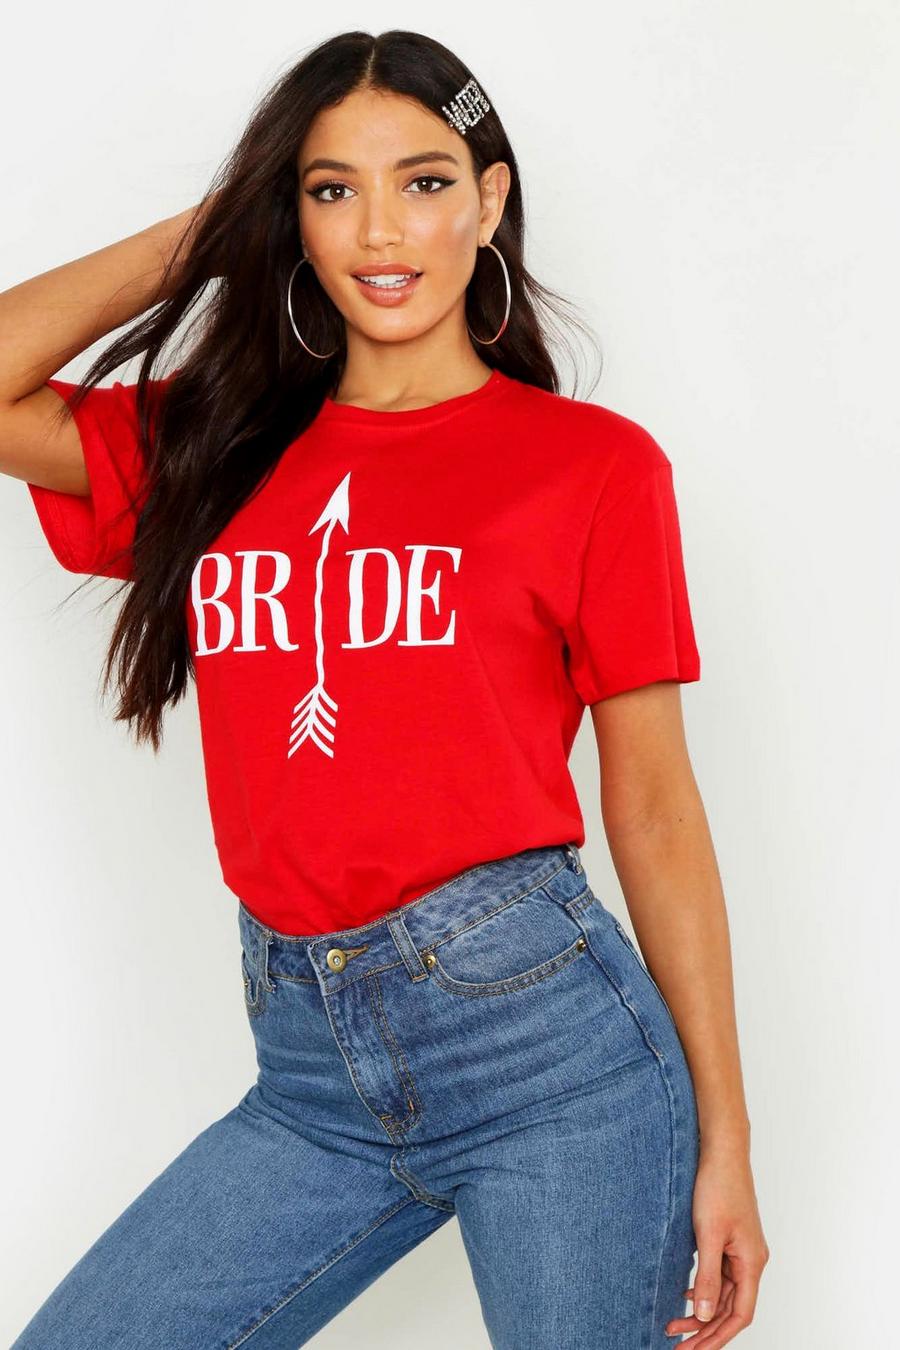 Camiseta con eslogan “Bride” image number 1